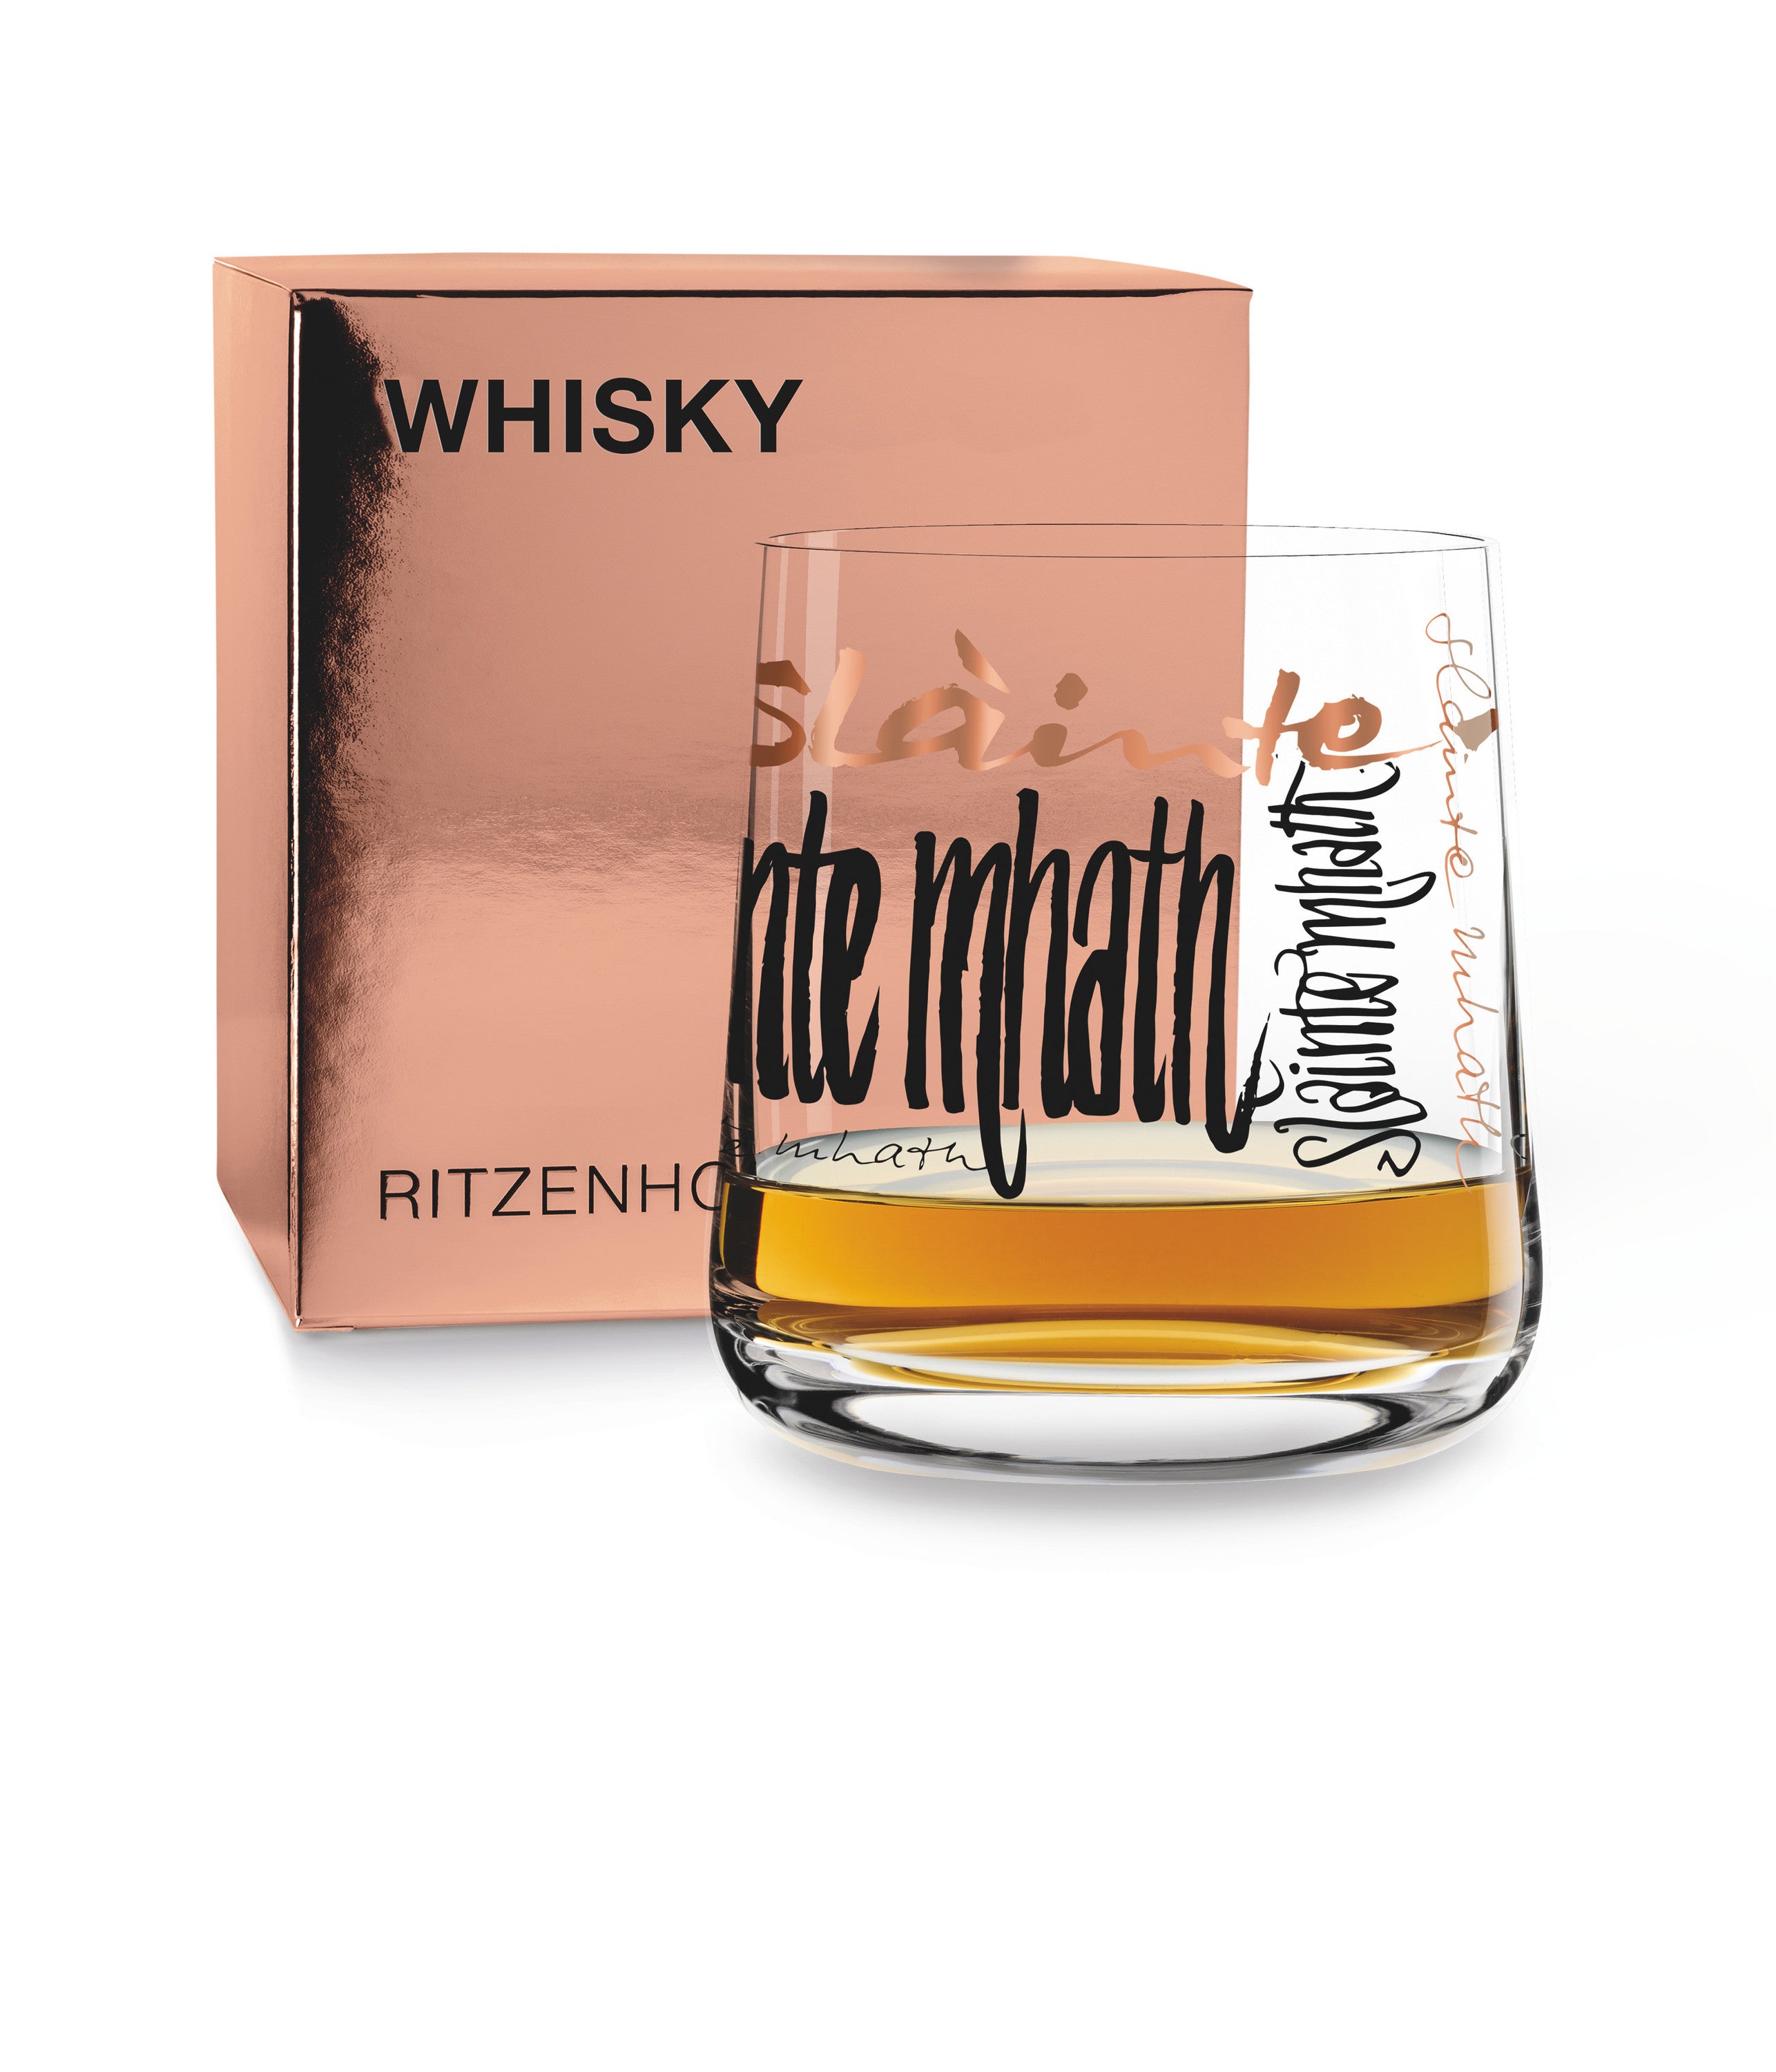 Ritzenhoff Whisky by Claus Dorsch